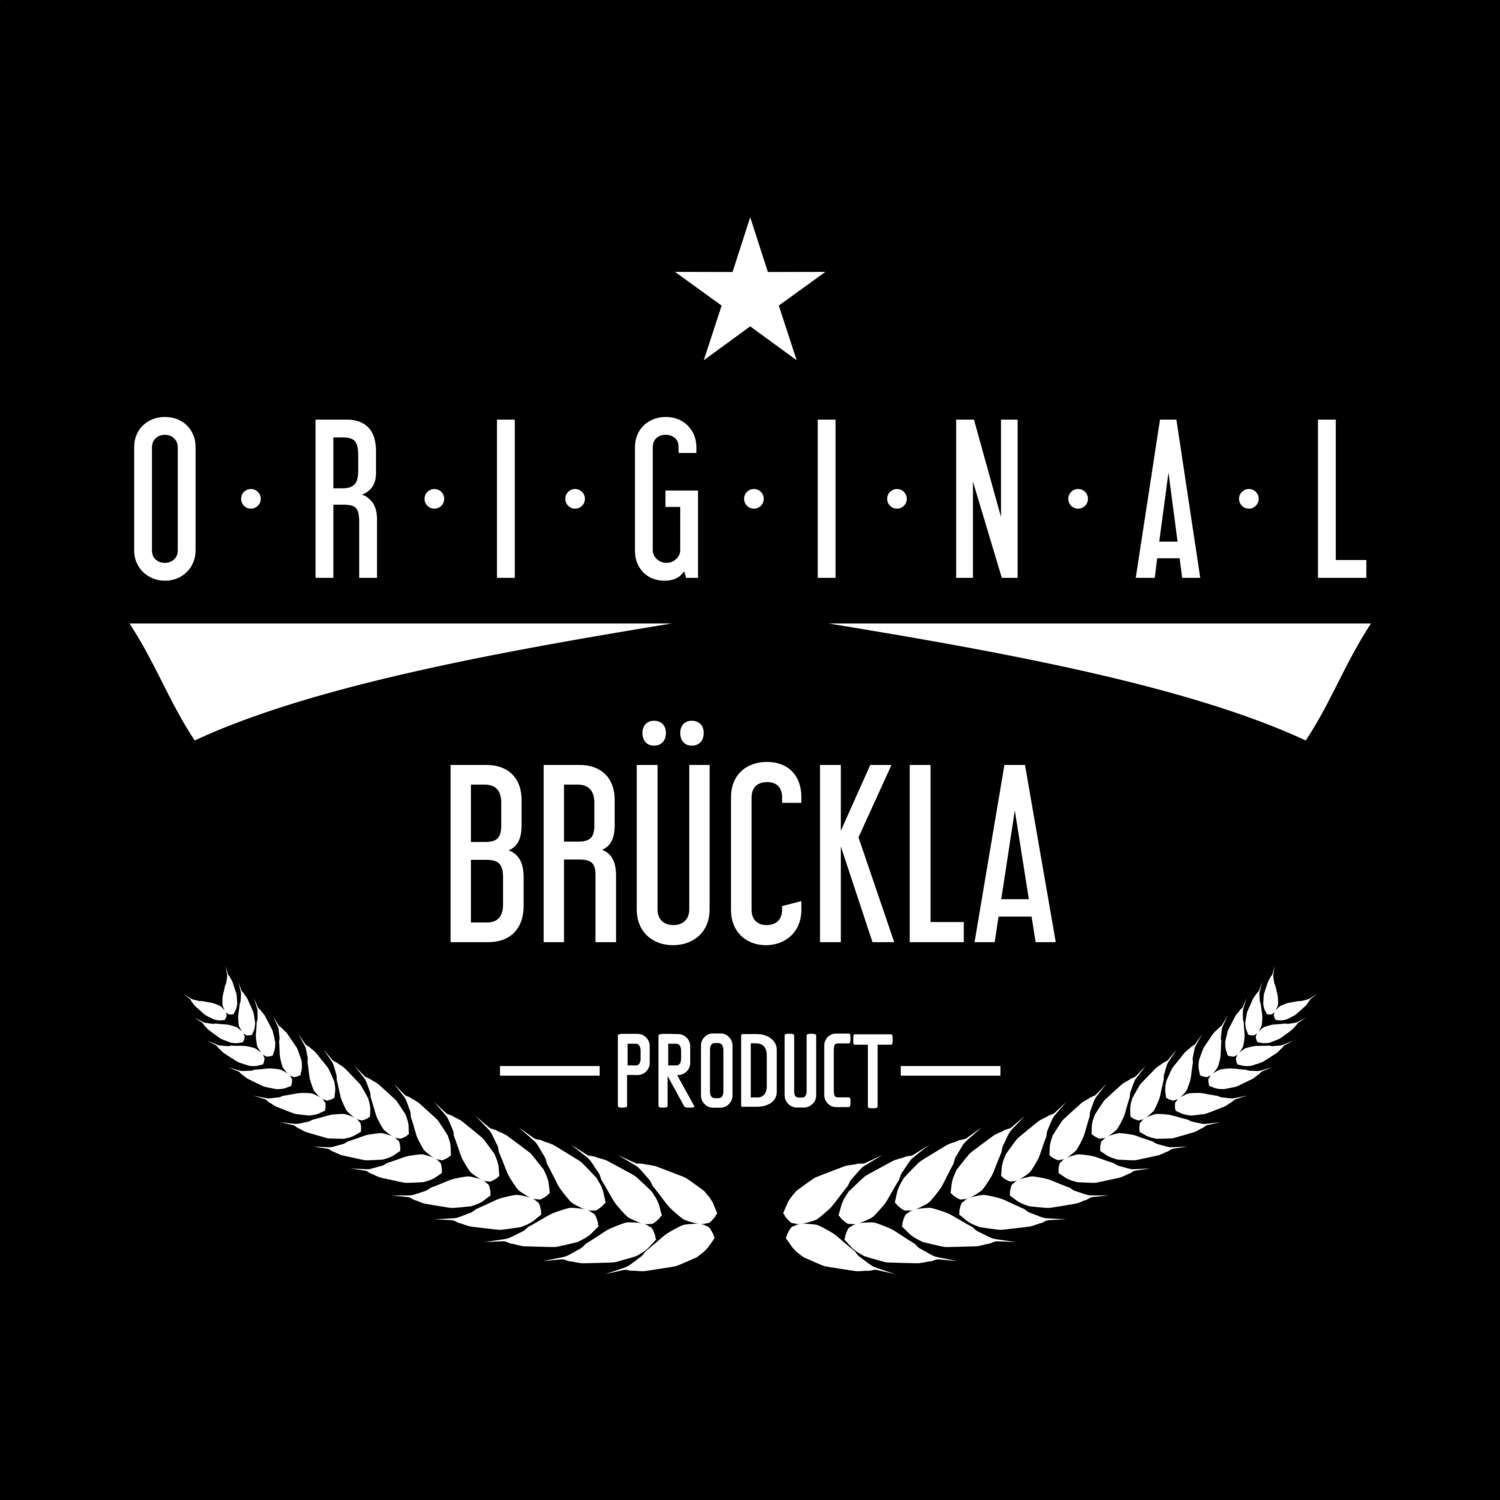 Brückla T-Shirt »Original Product«